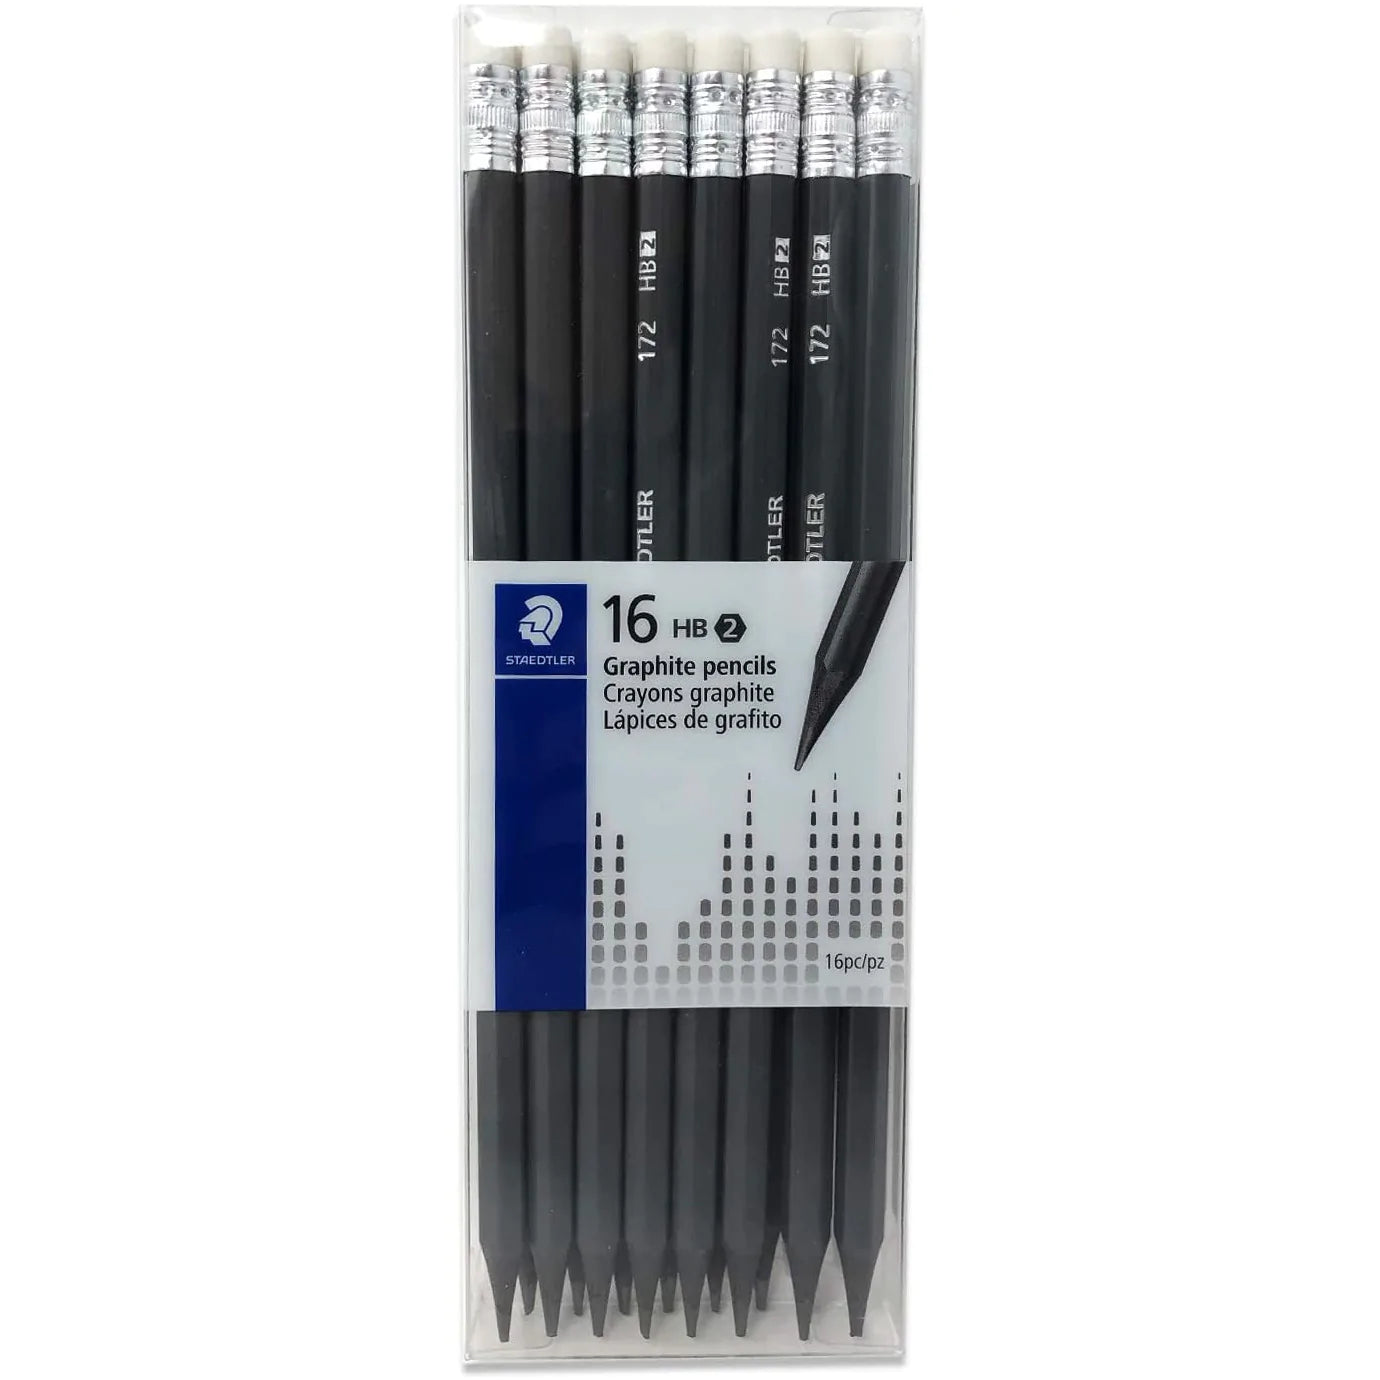 Staedtler Graphite Pencils - HB (#2) / box of 16 pencils